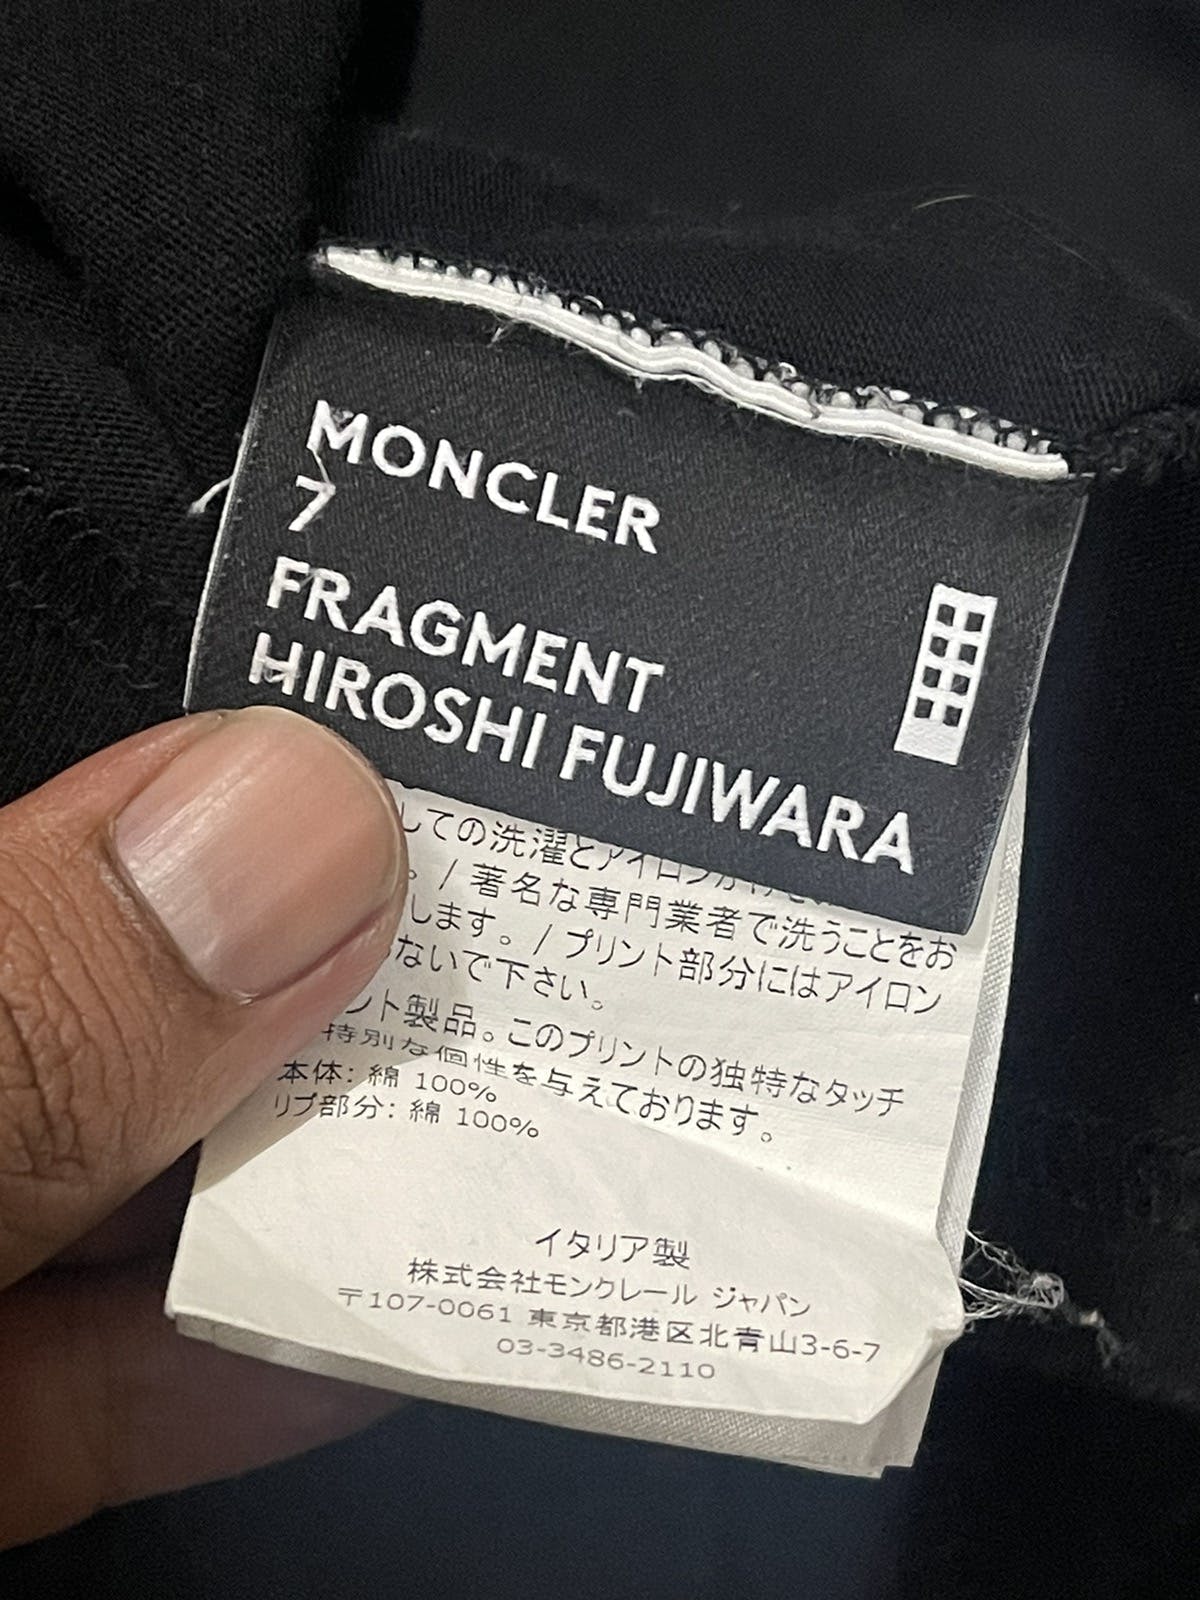 Moncler no7 fragment hiroshi fujiwara tee - 4